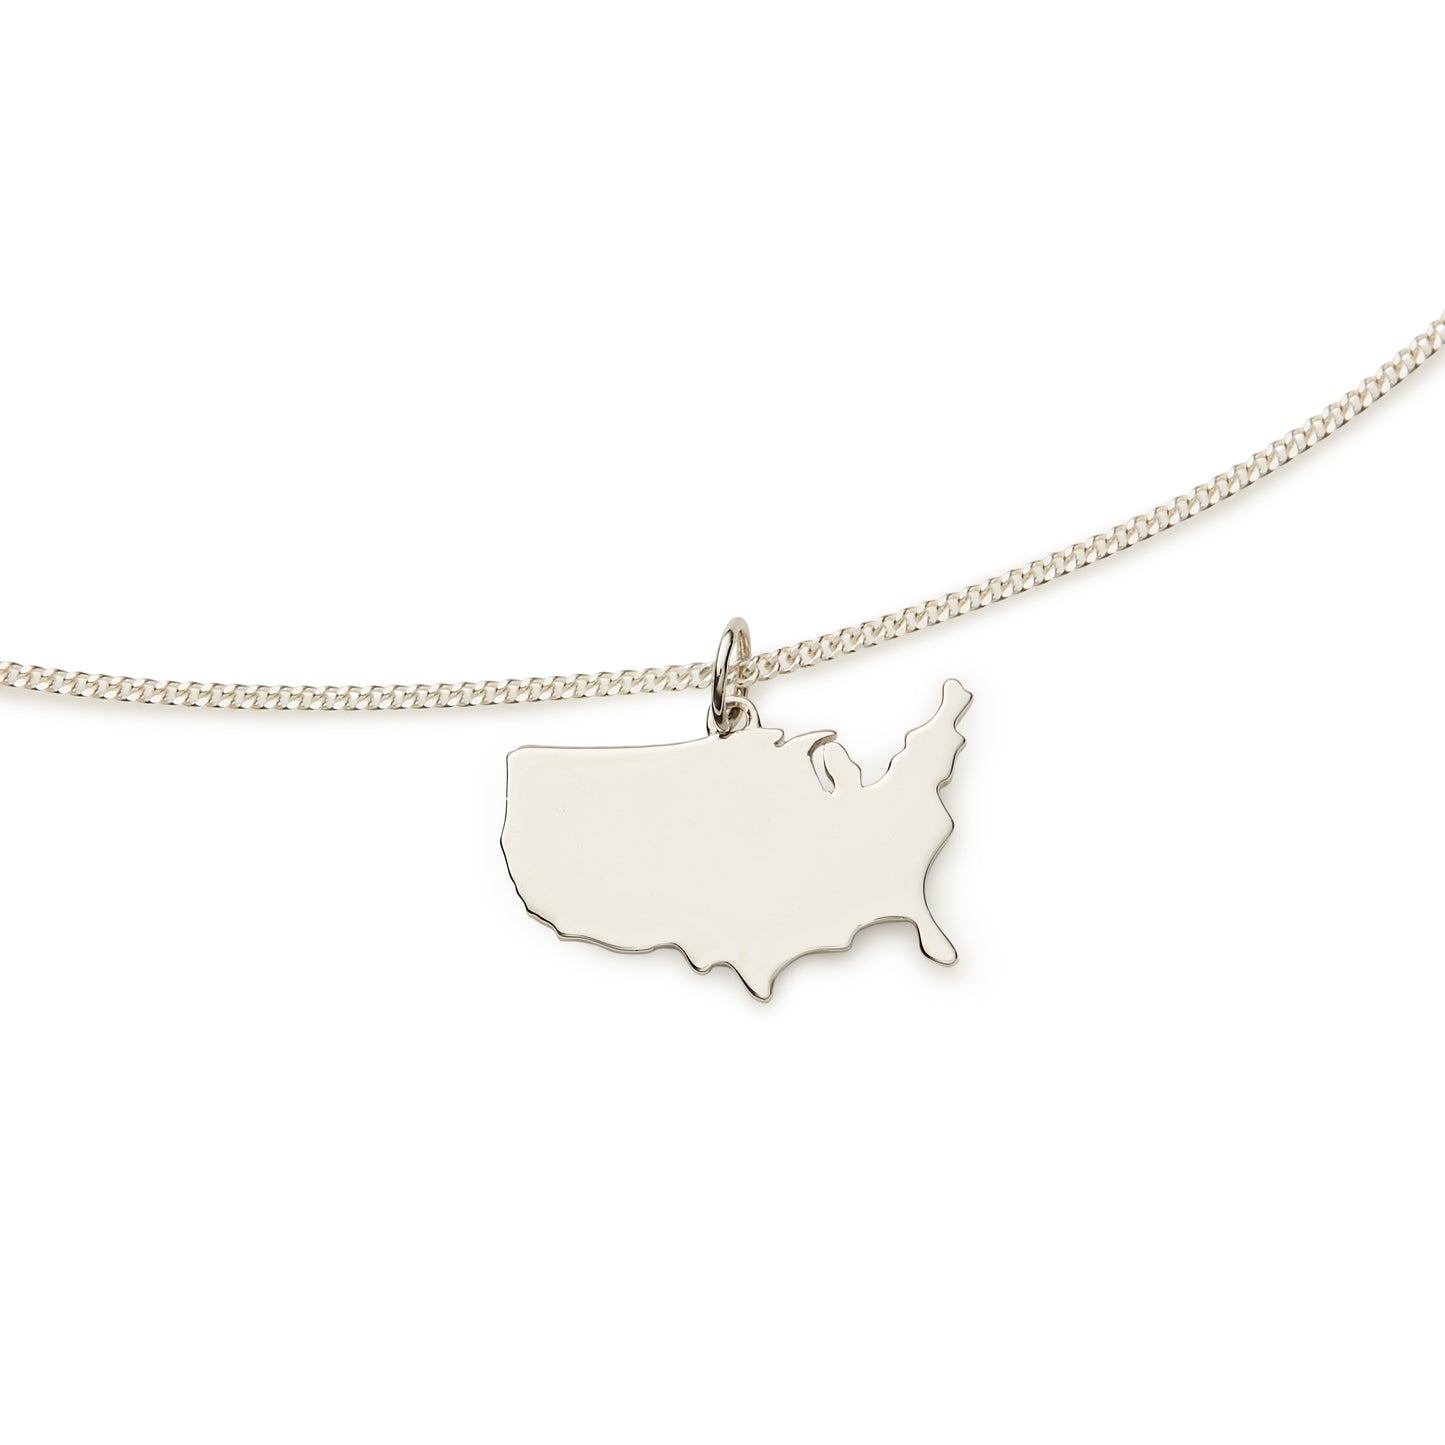 U.S.A Map Necklace